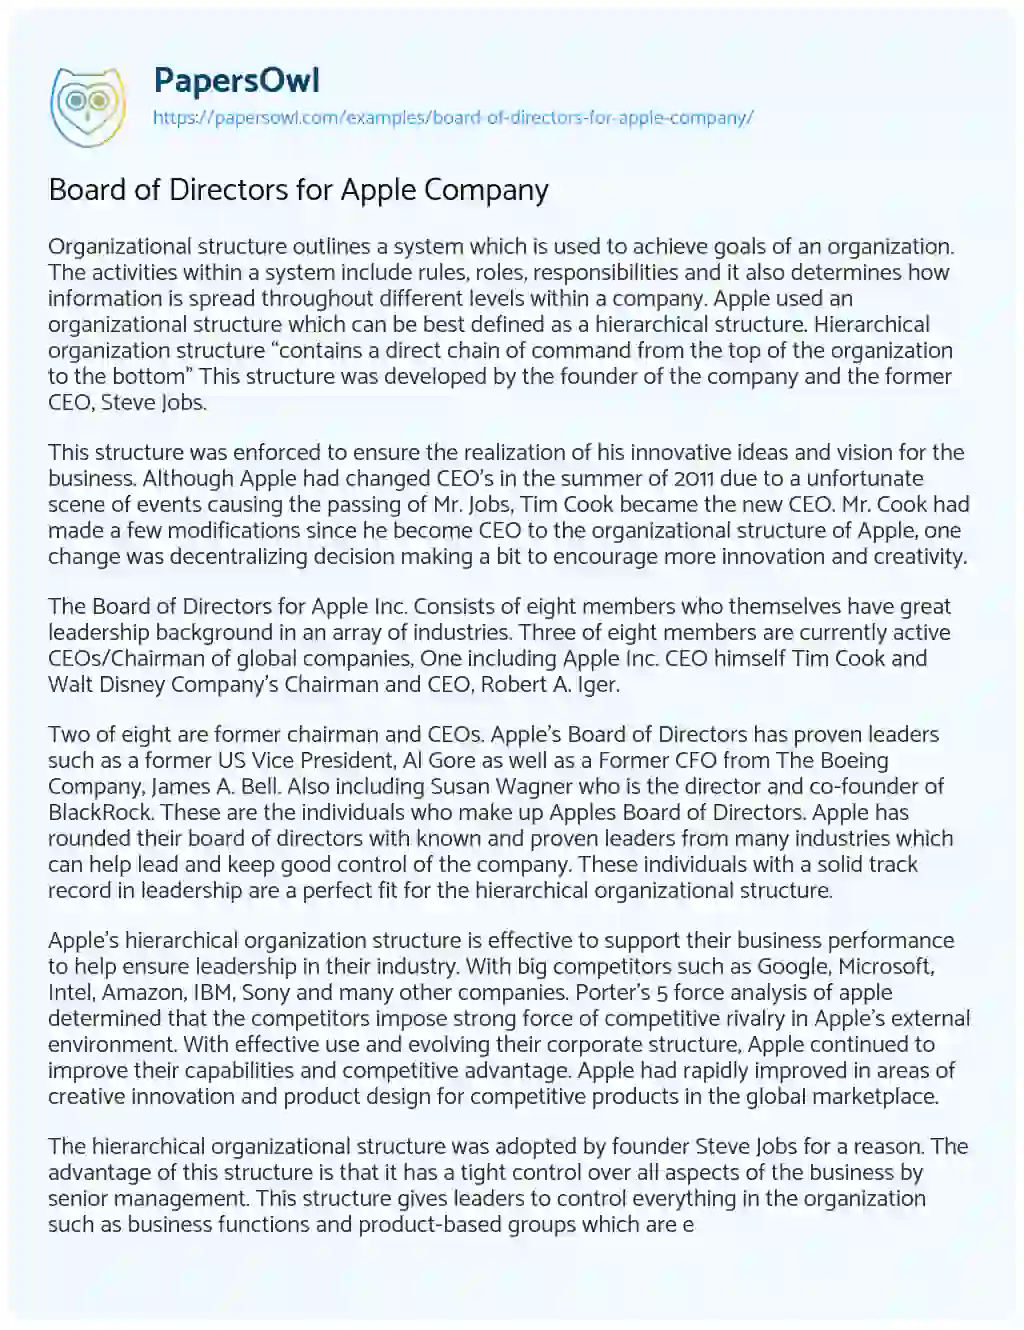 Board of Directors for Apple Company essay